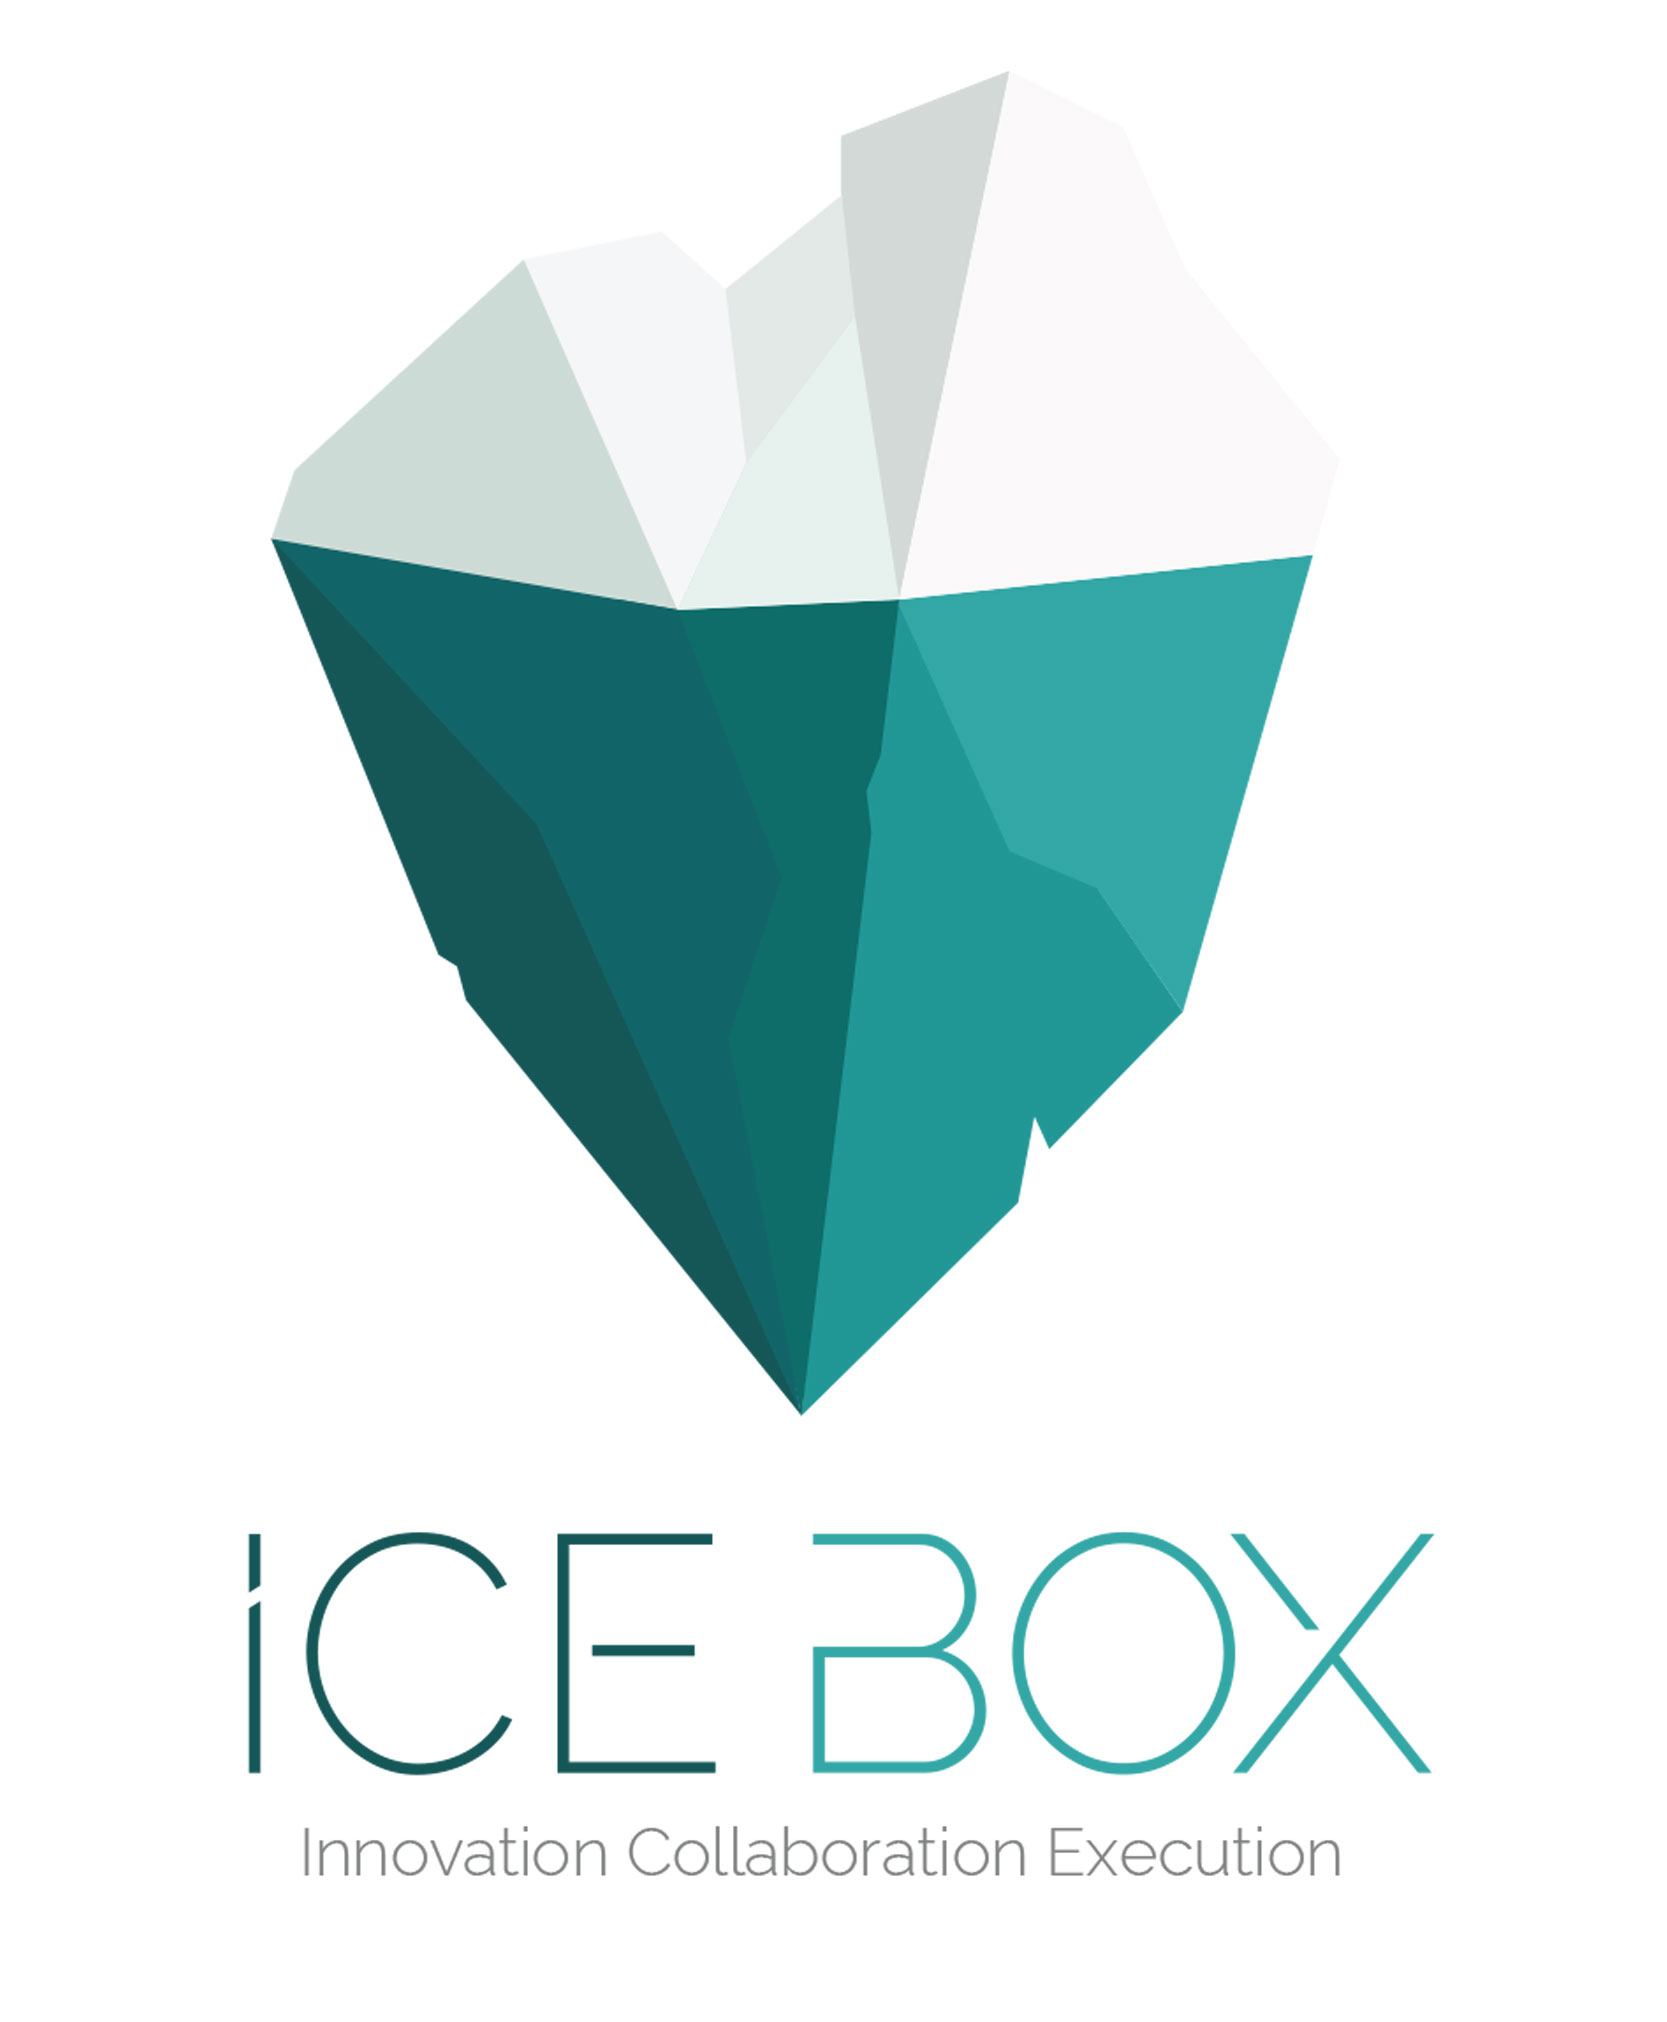 Icebox branding